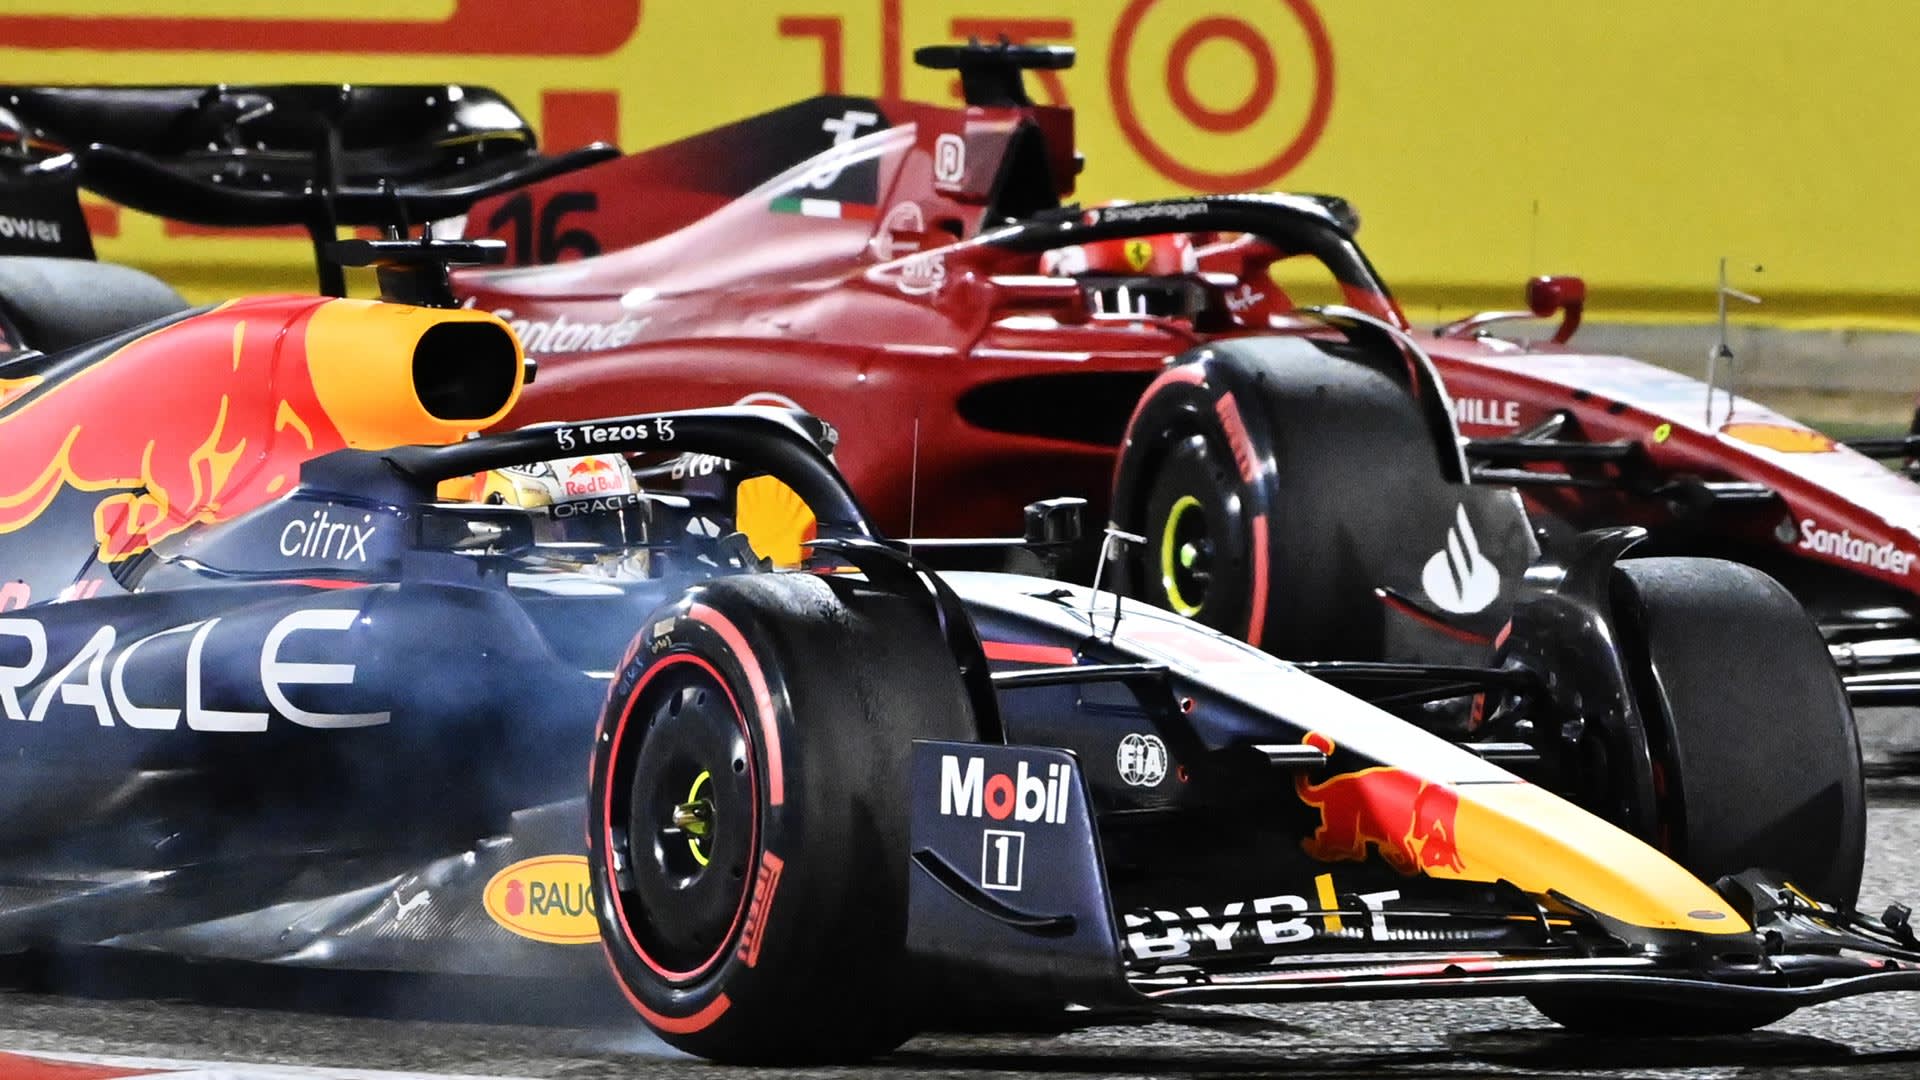 More Ferrari success or a Red Bull resurgence?